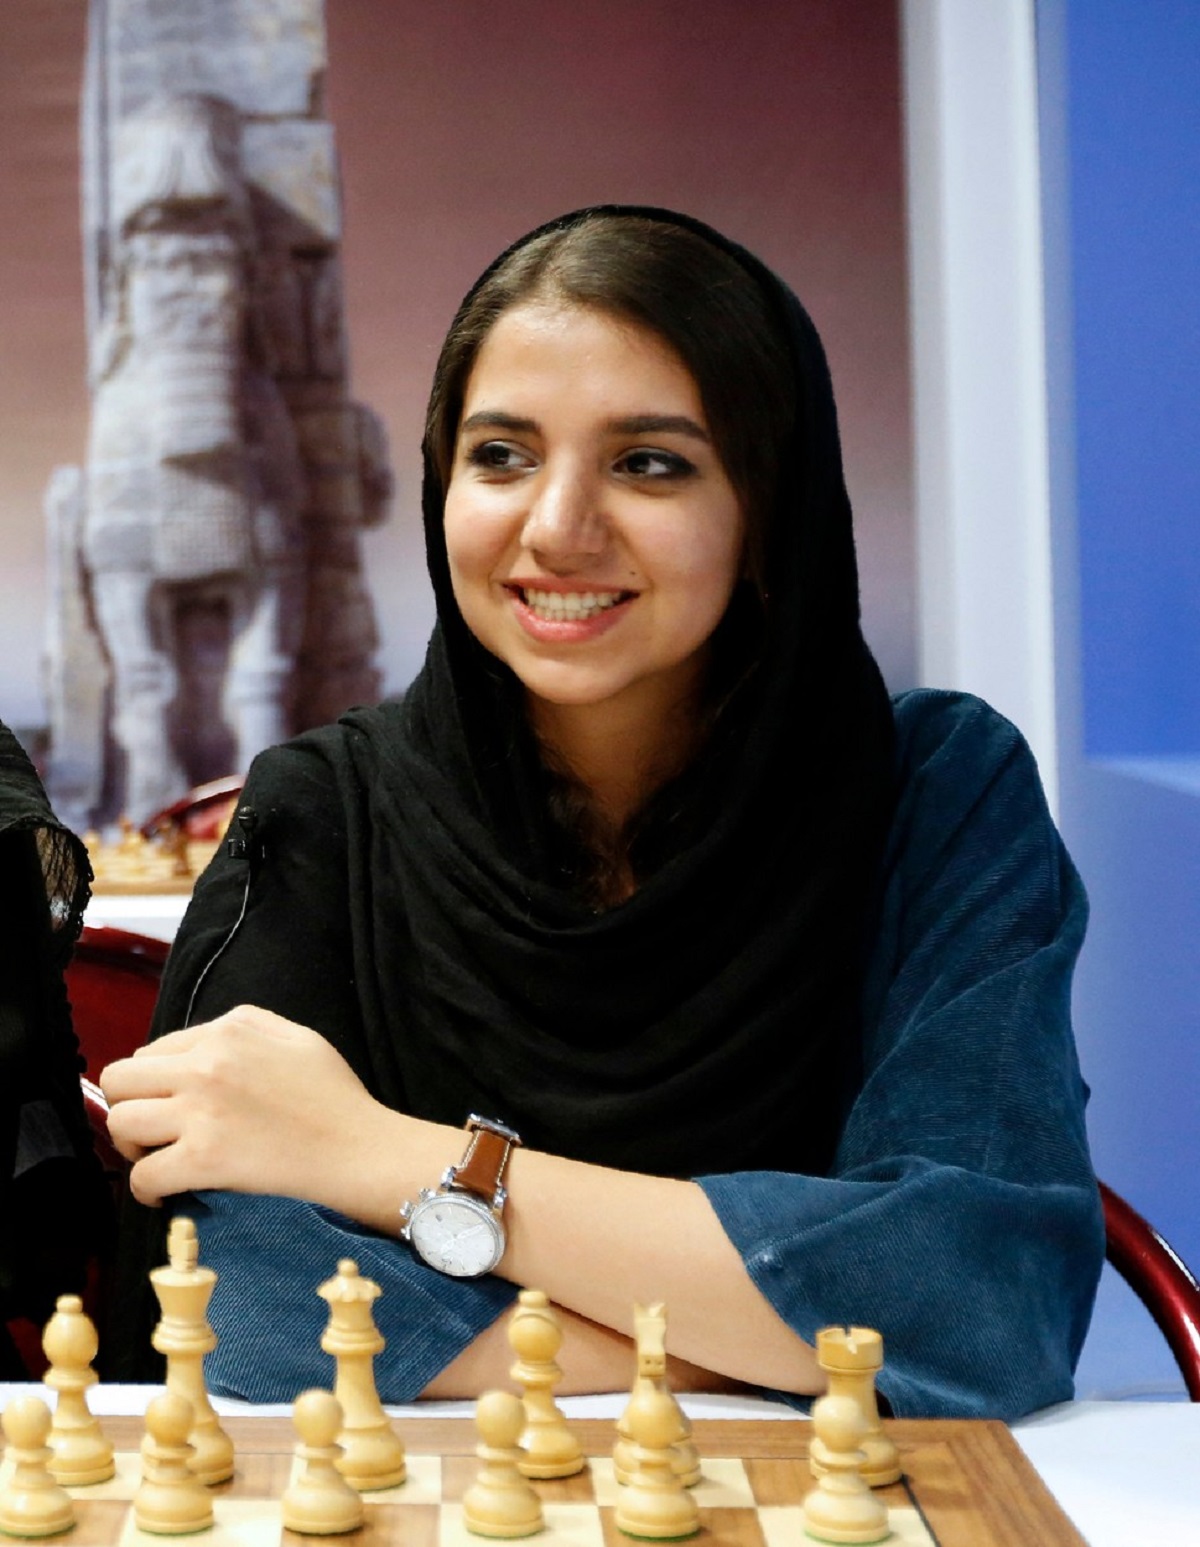 Sara Khadem în fața unei tabșe de șah